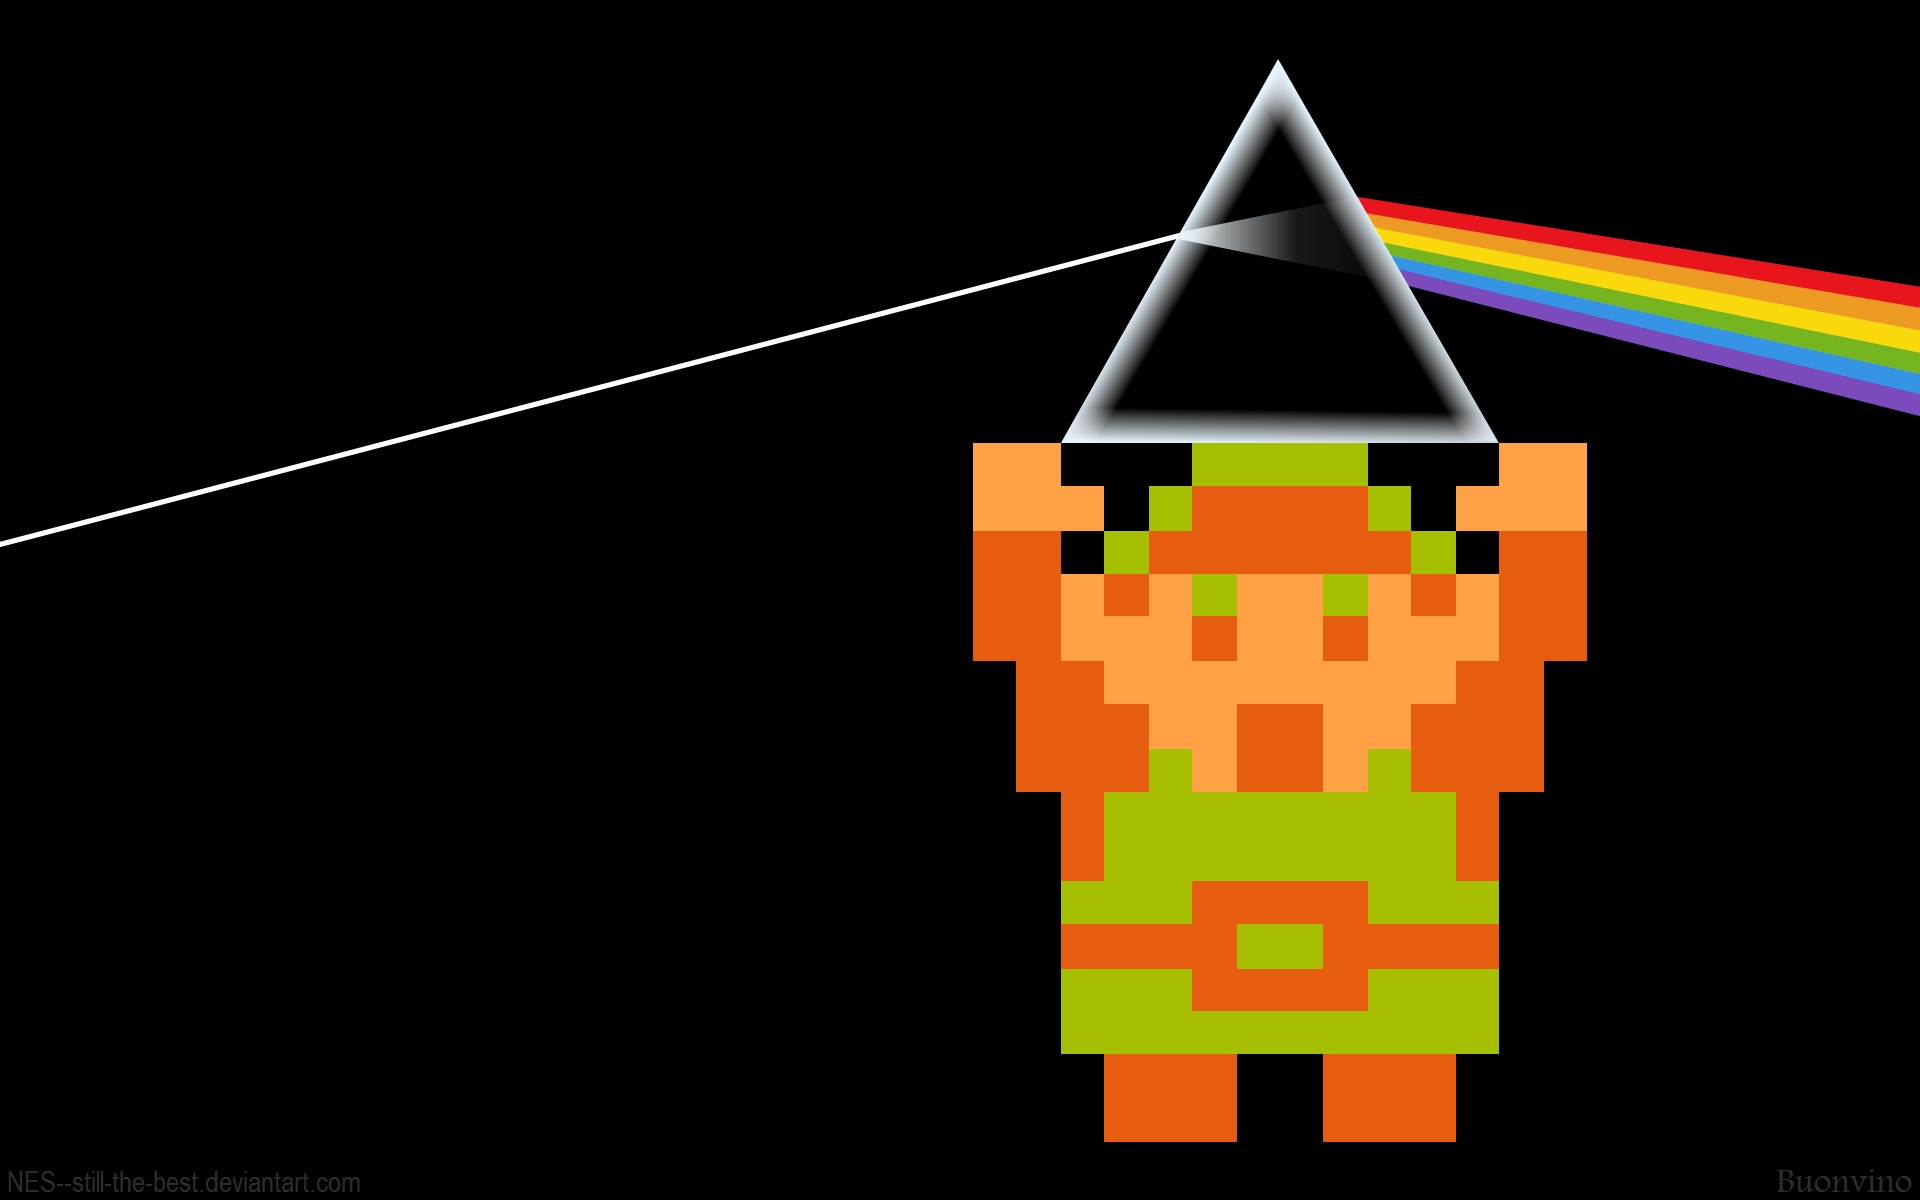 video games, Pink Floyd, Link, prism, The Legend of Zelda, rainbows, retro games - desktop wallpaper